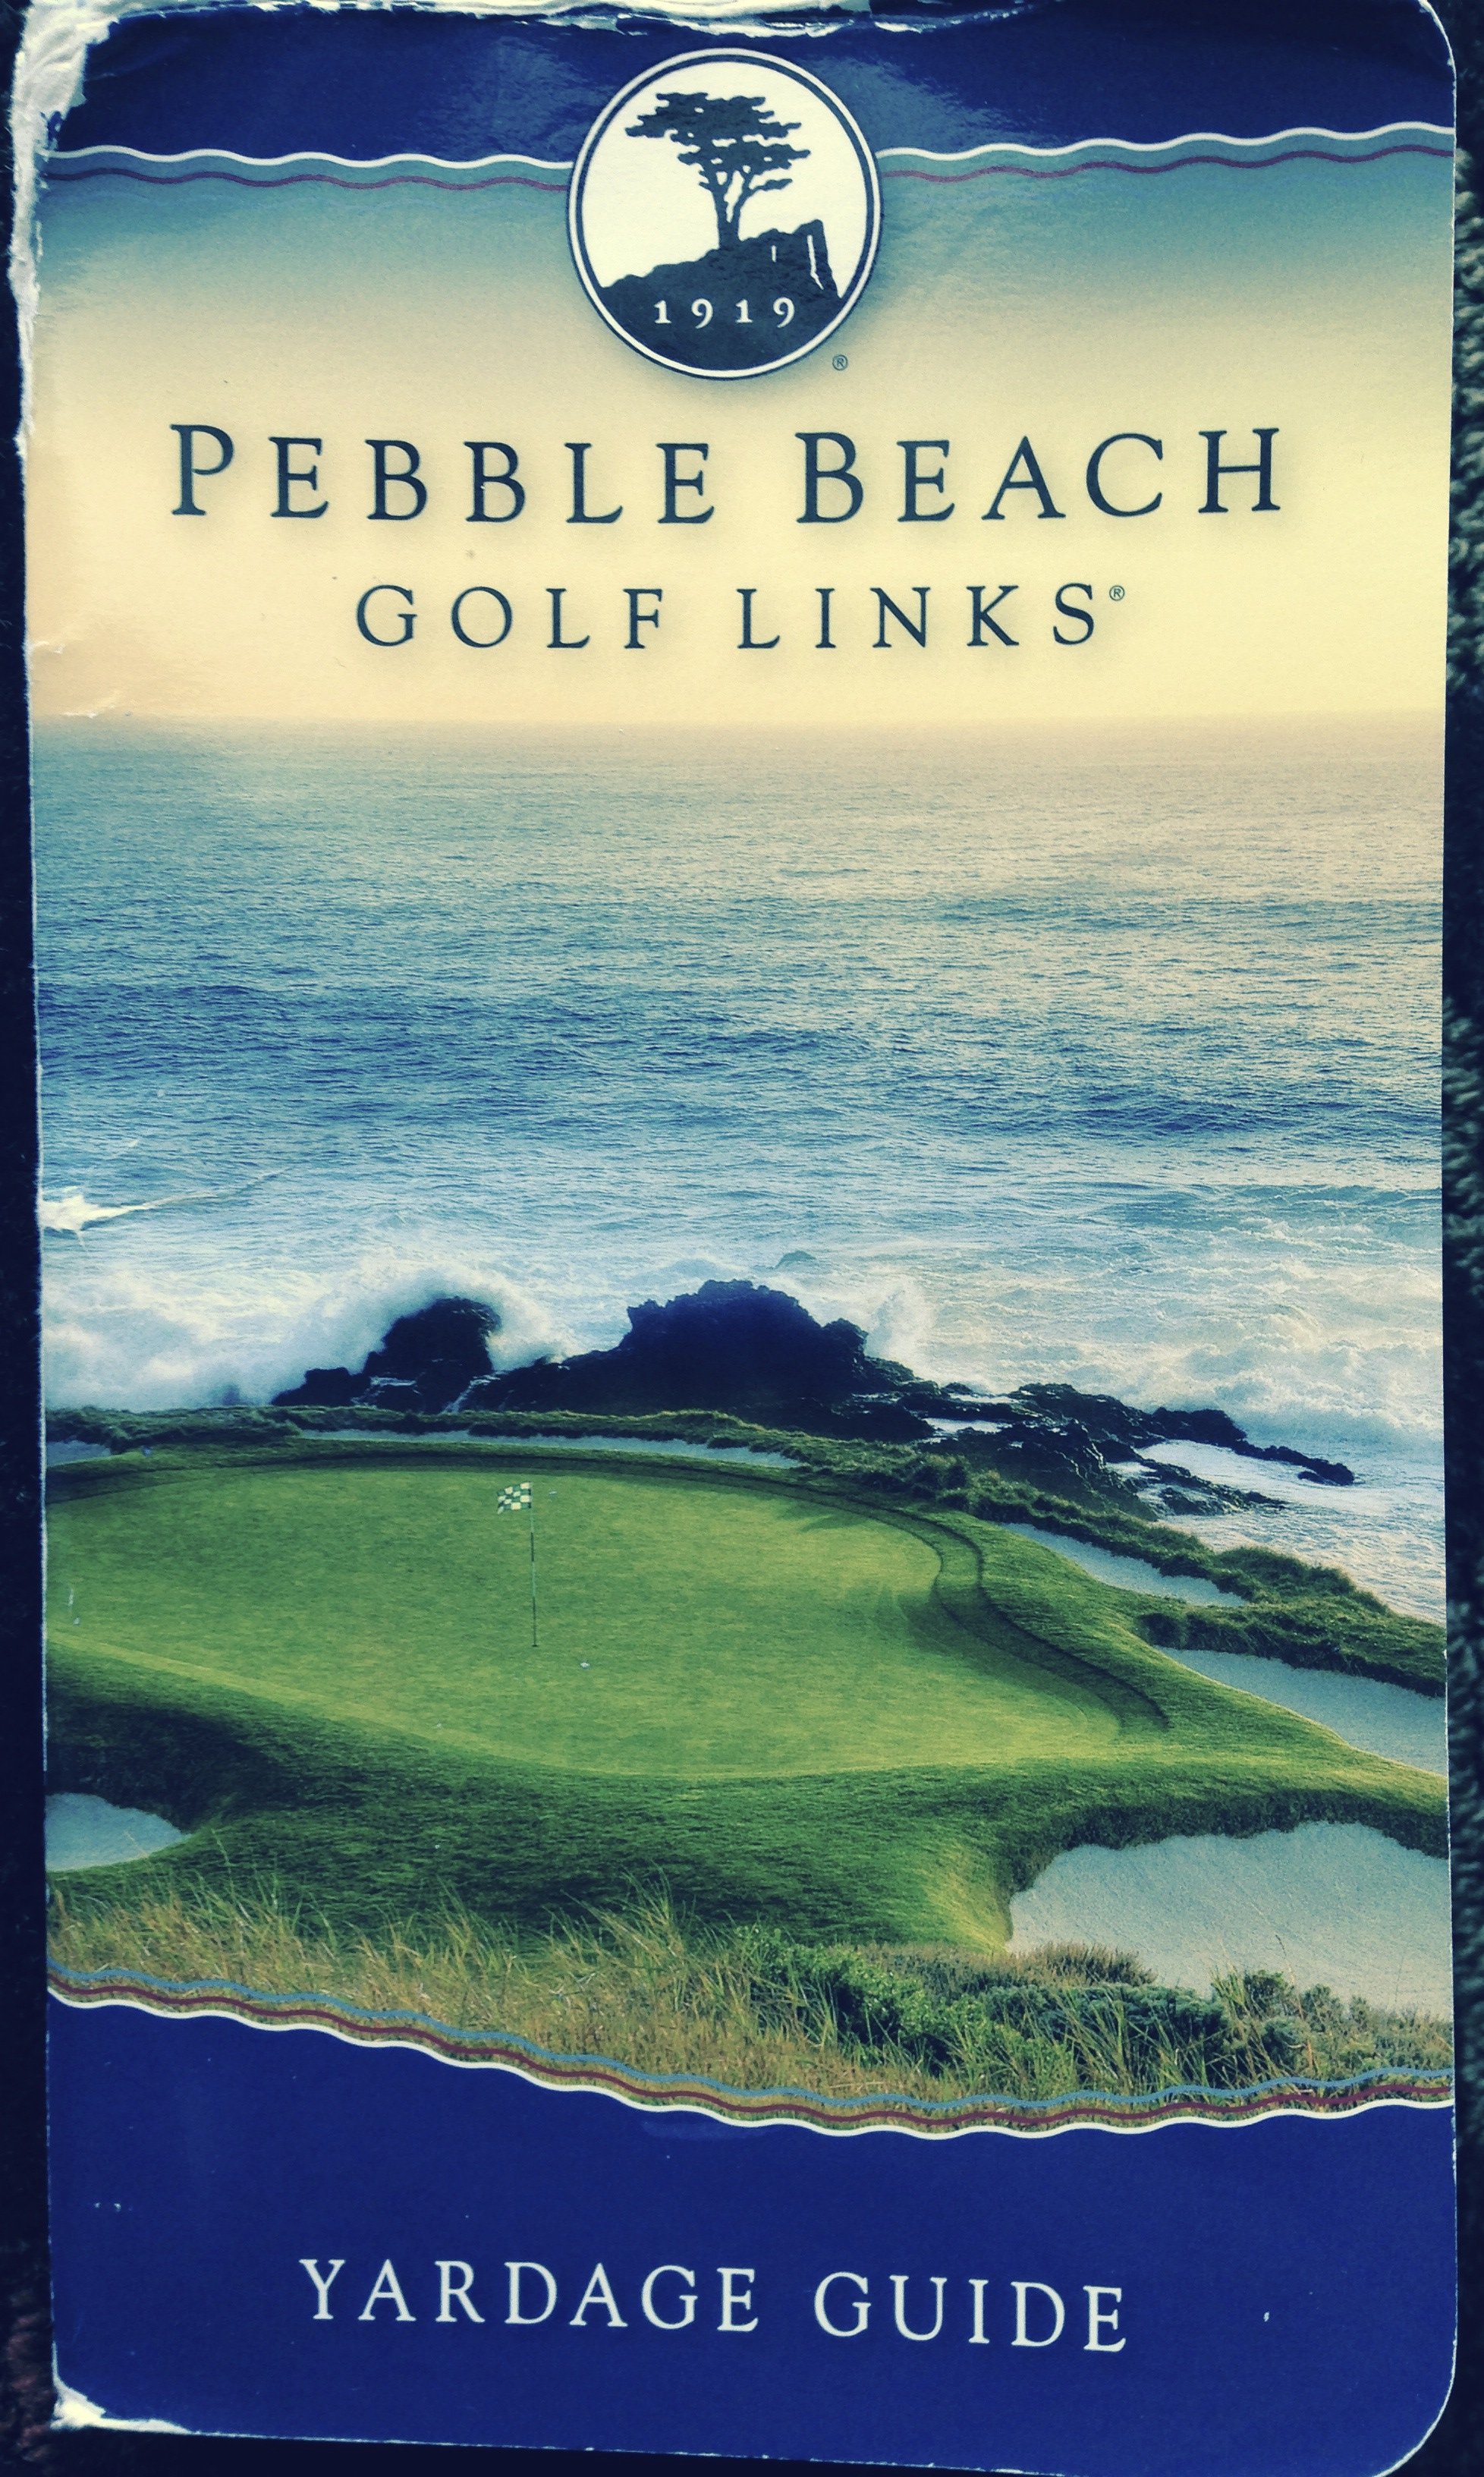 Pebble Beach Golf Links yardage guide cover